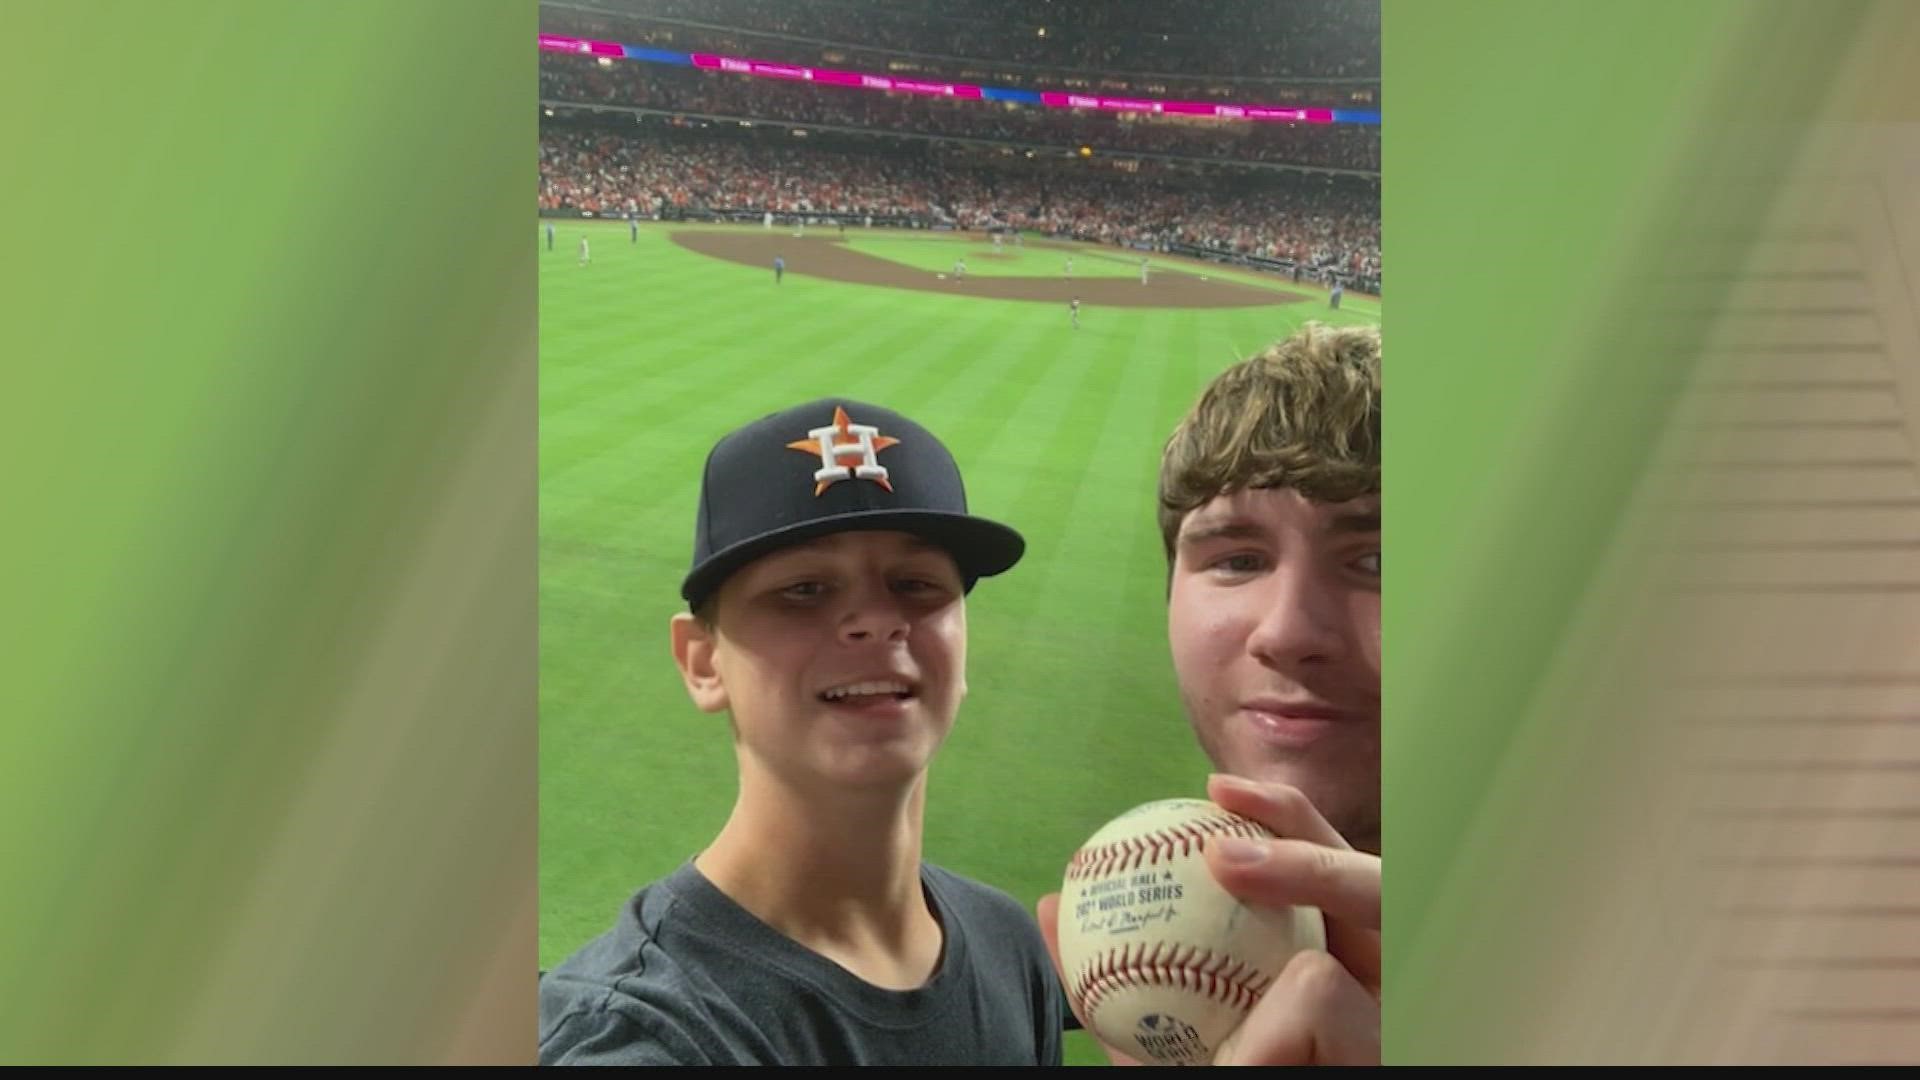 Meet the teens who took home Freddie Freeman's Game 6 home run ball.